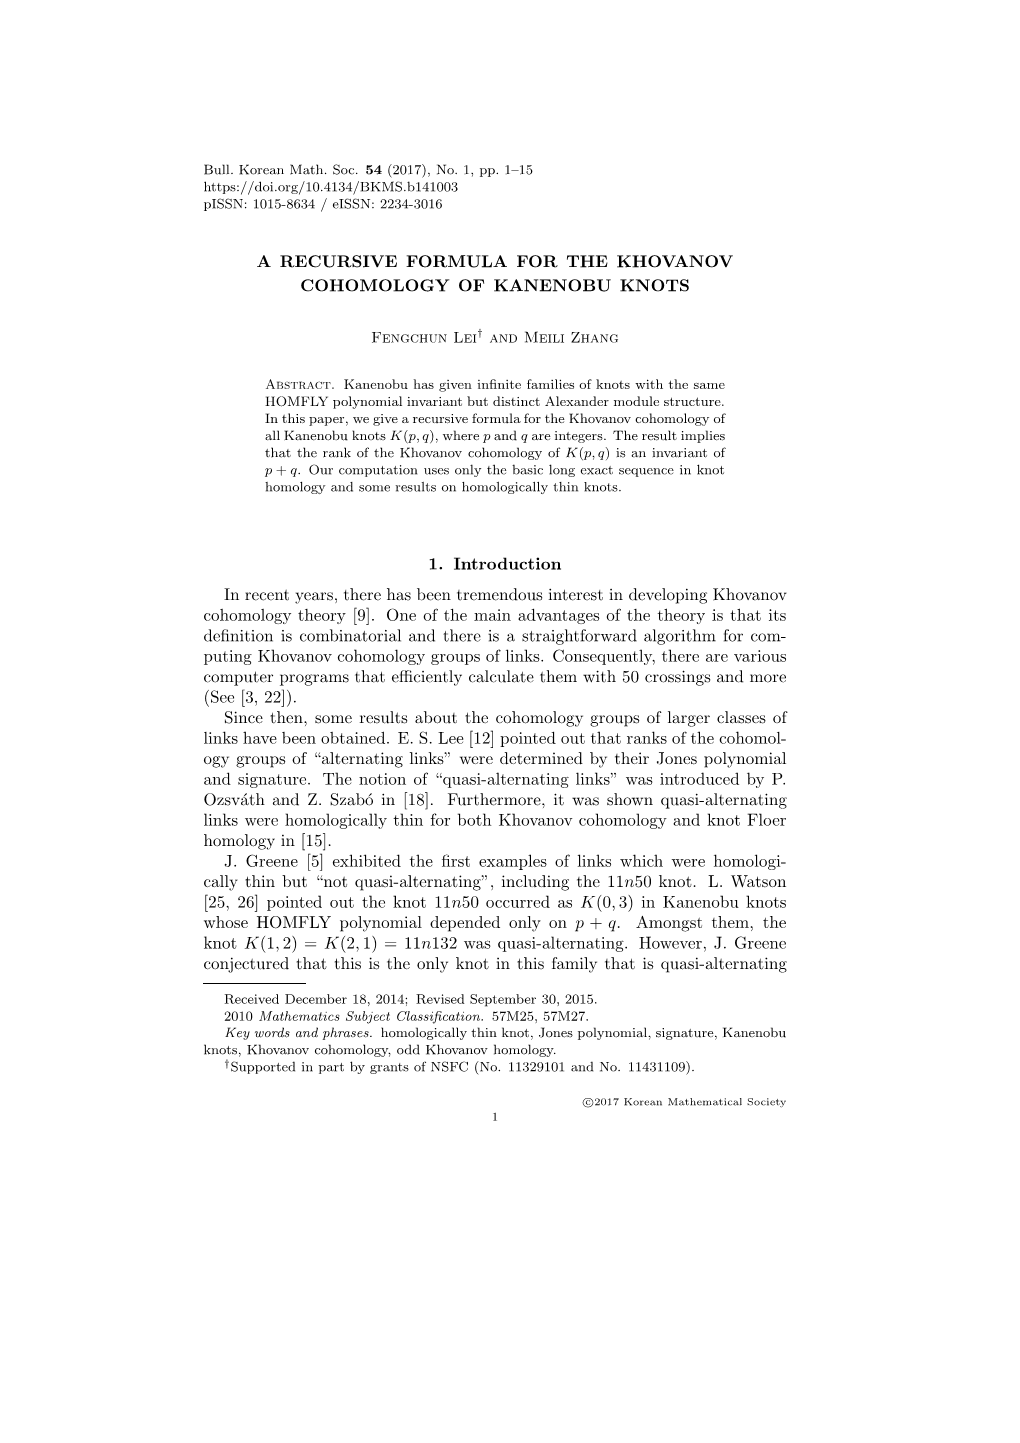 A Recursive Formula for the Khovanov Cohomology of Kanenobu Knots